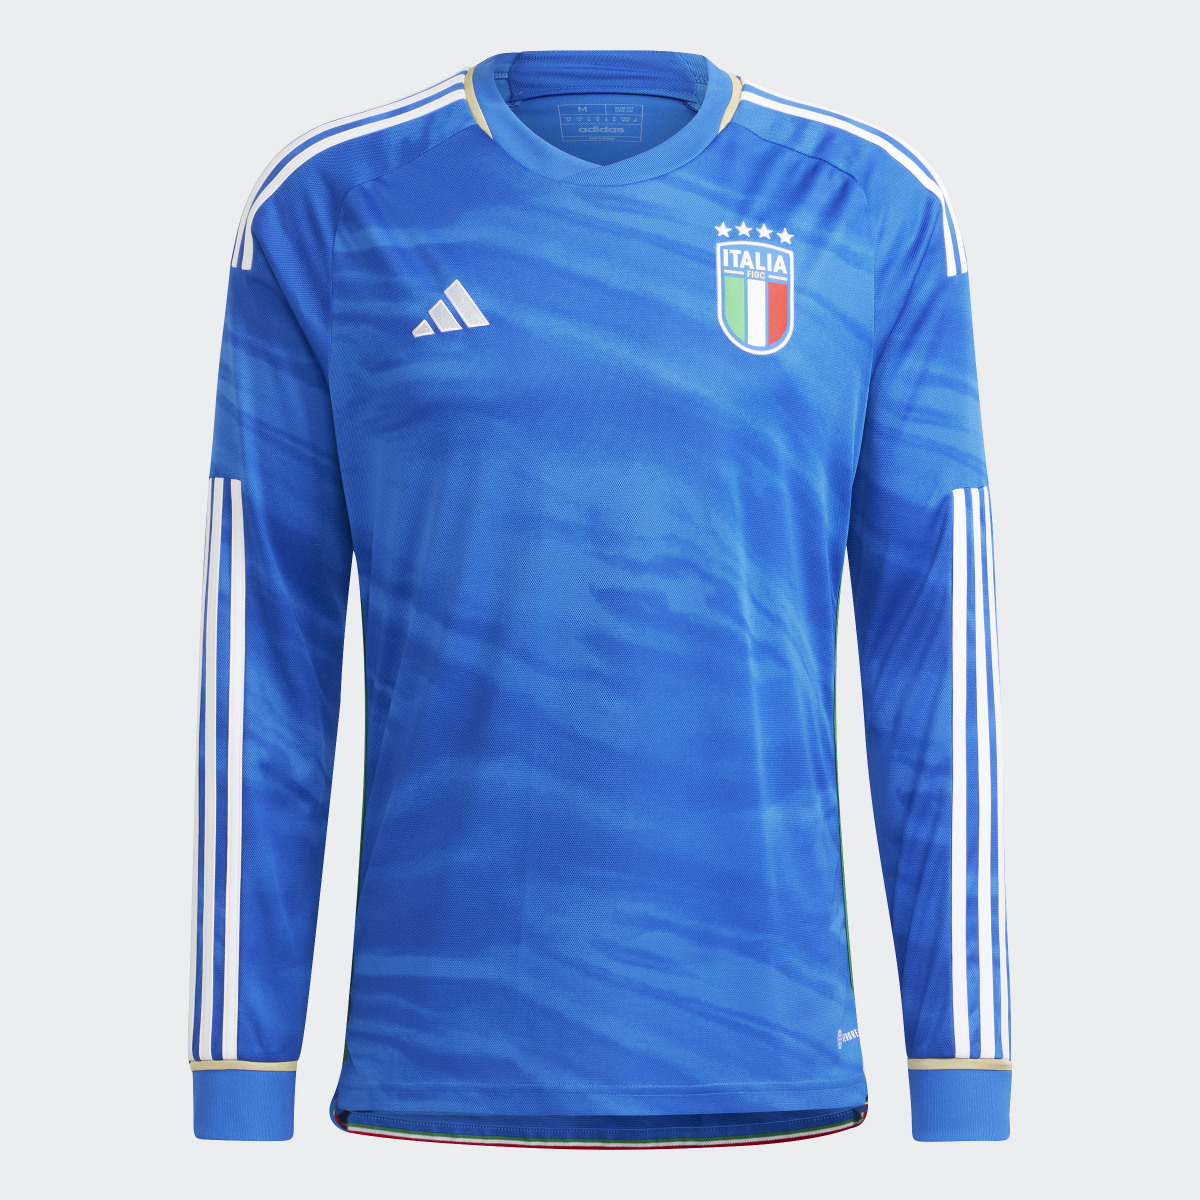 Adidas Italy 23 Home Long Sleeve Jersey. 6